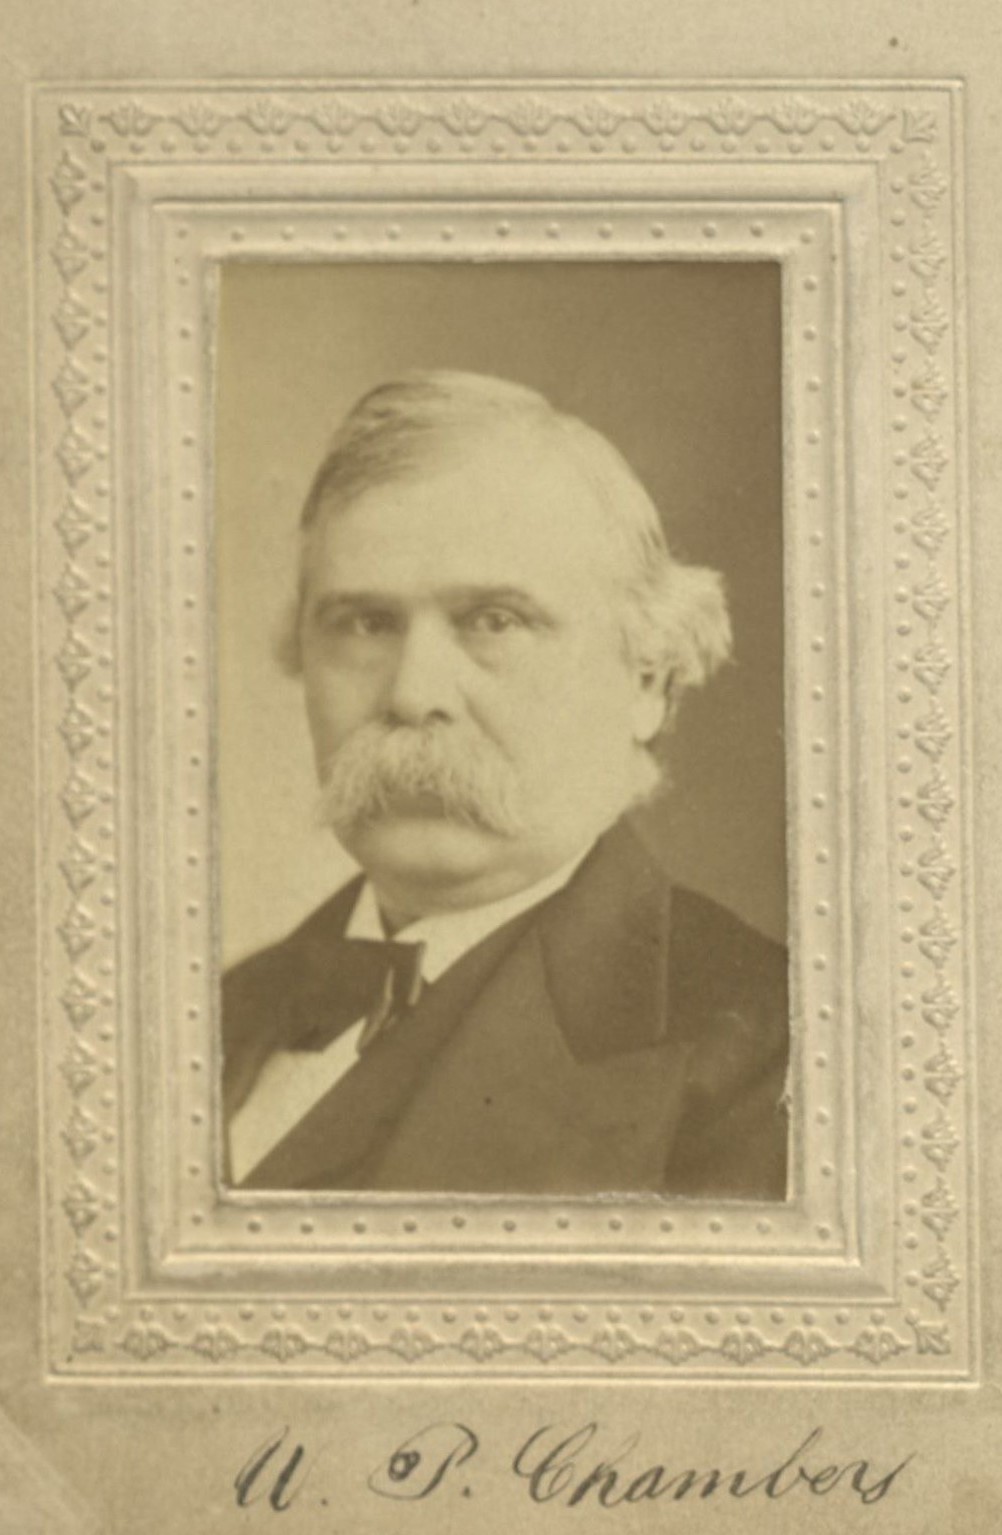 Member portrait of William P. Chambers